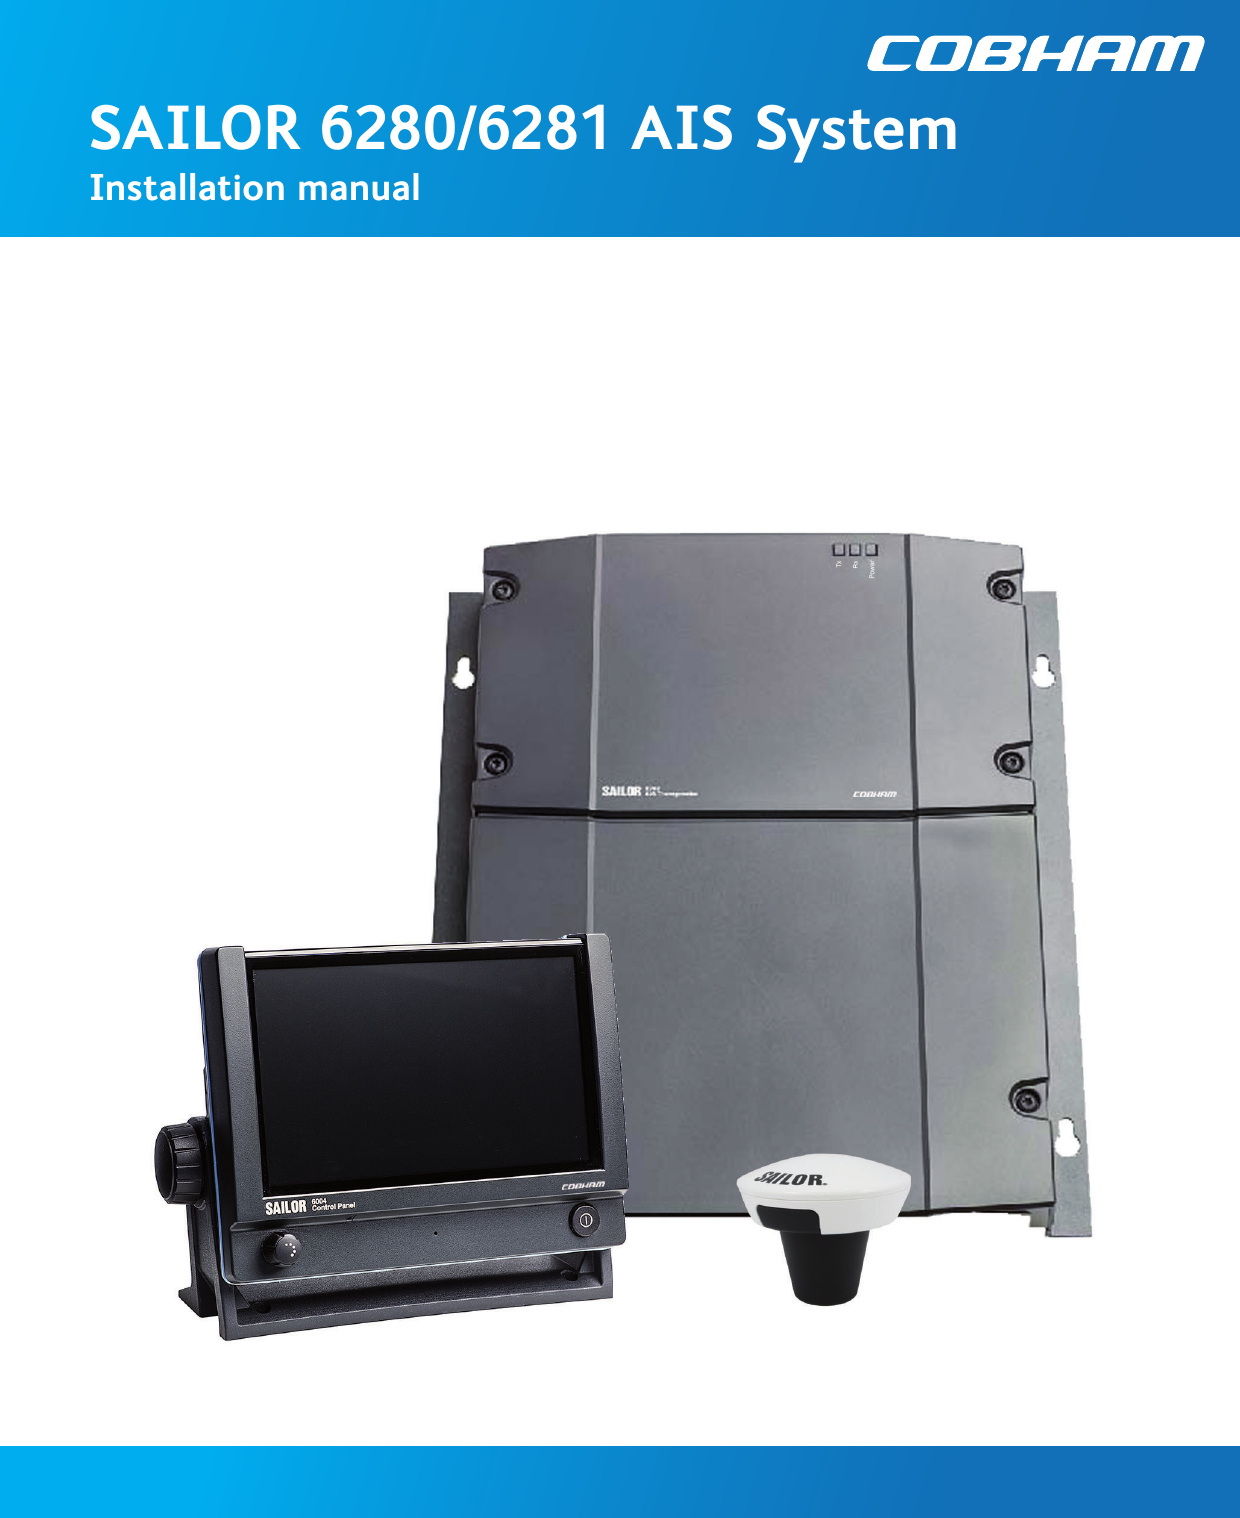 SAILOR 6280/6281 AIS SystemInstallation manual